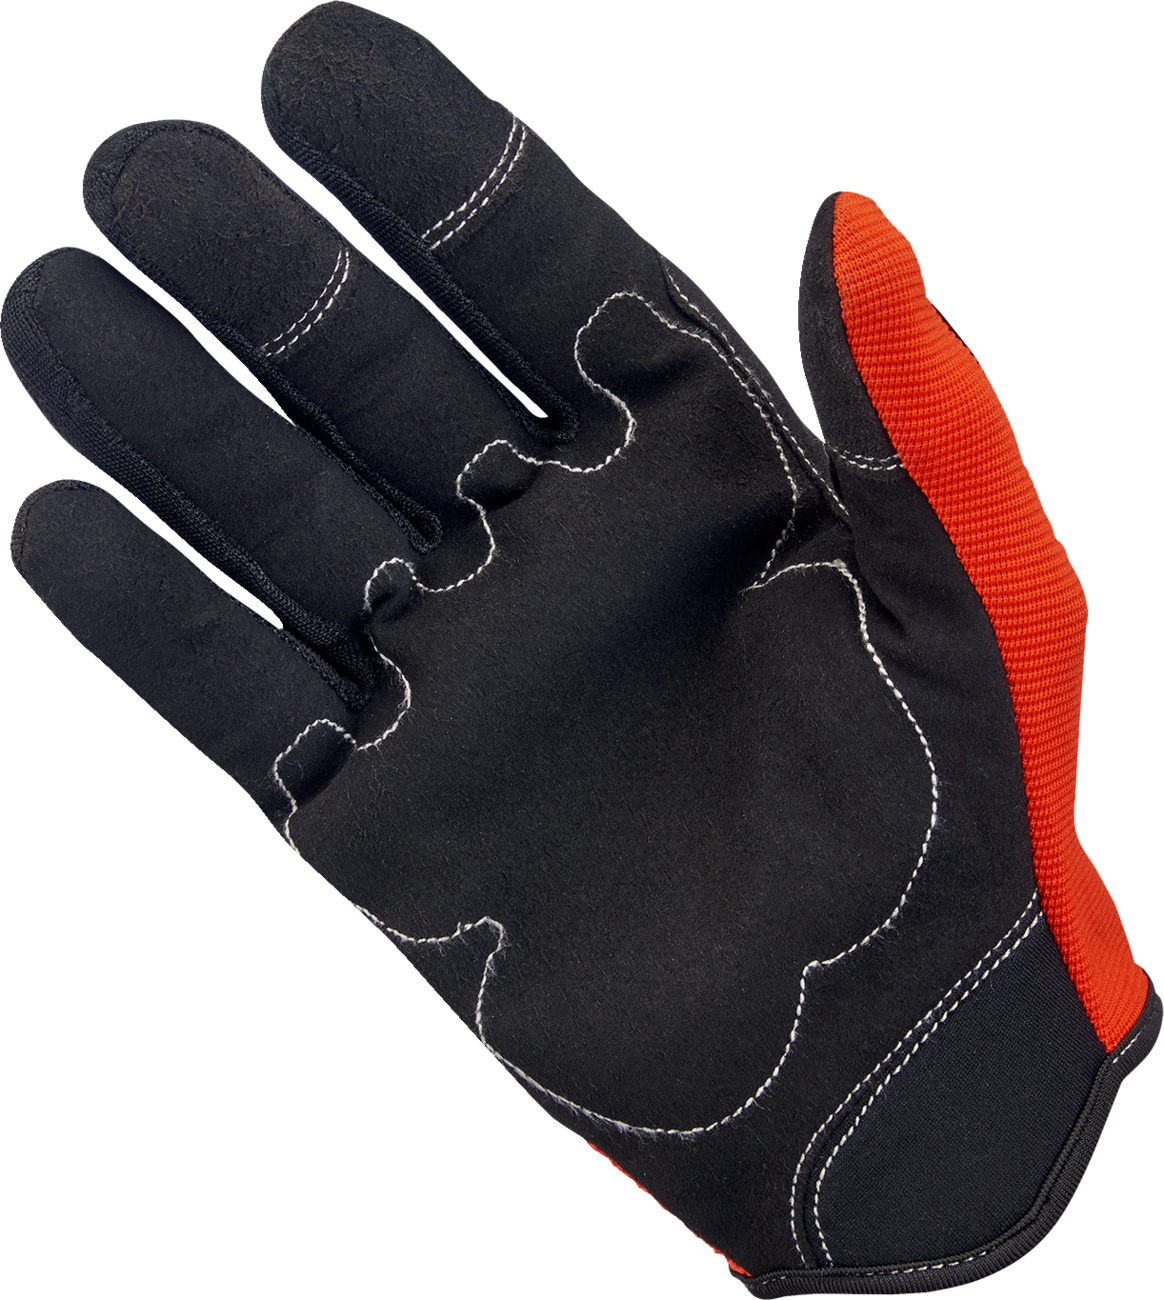 BILTWELL Moto Gloves - Orange/Black - Medium 1501-0106-003